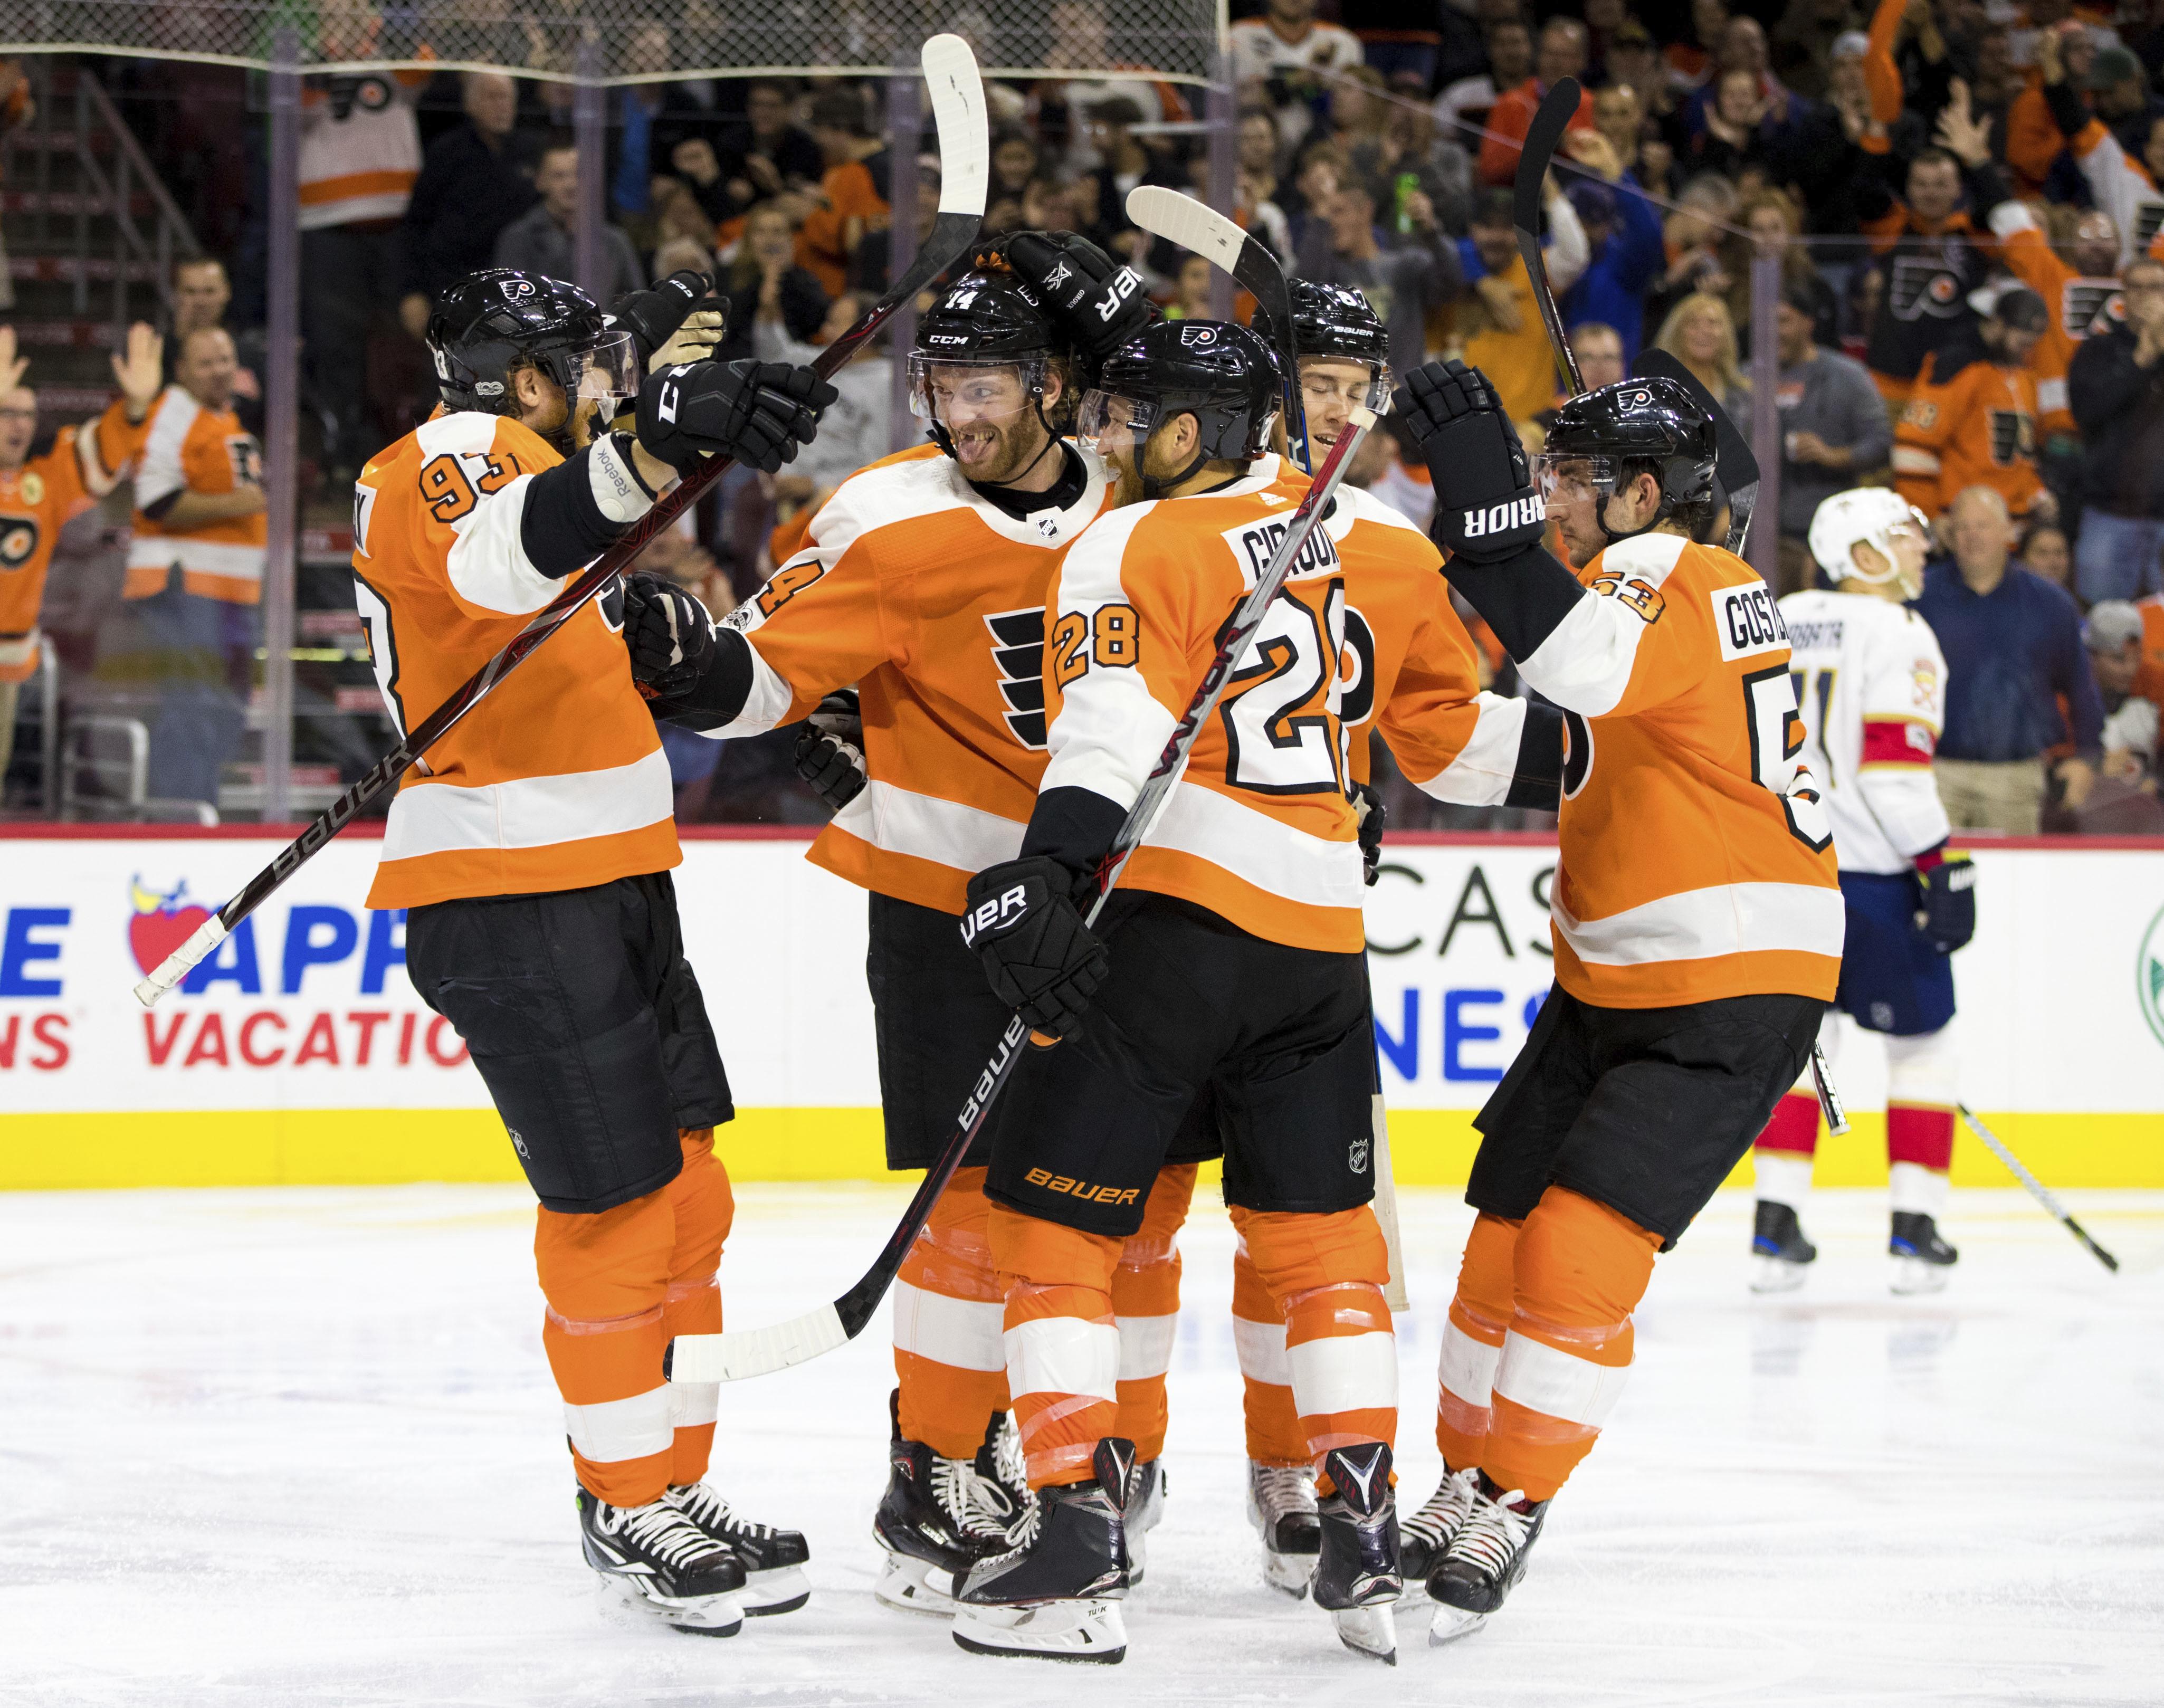 Claude Giroux scores in OT, Flyers beat Penguins in Stadium Series